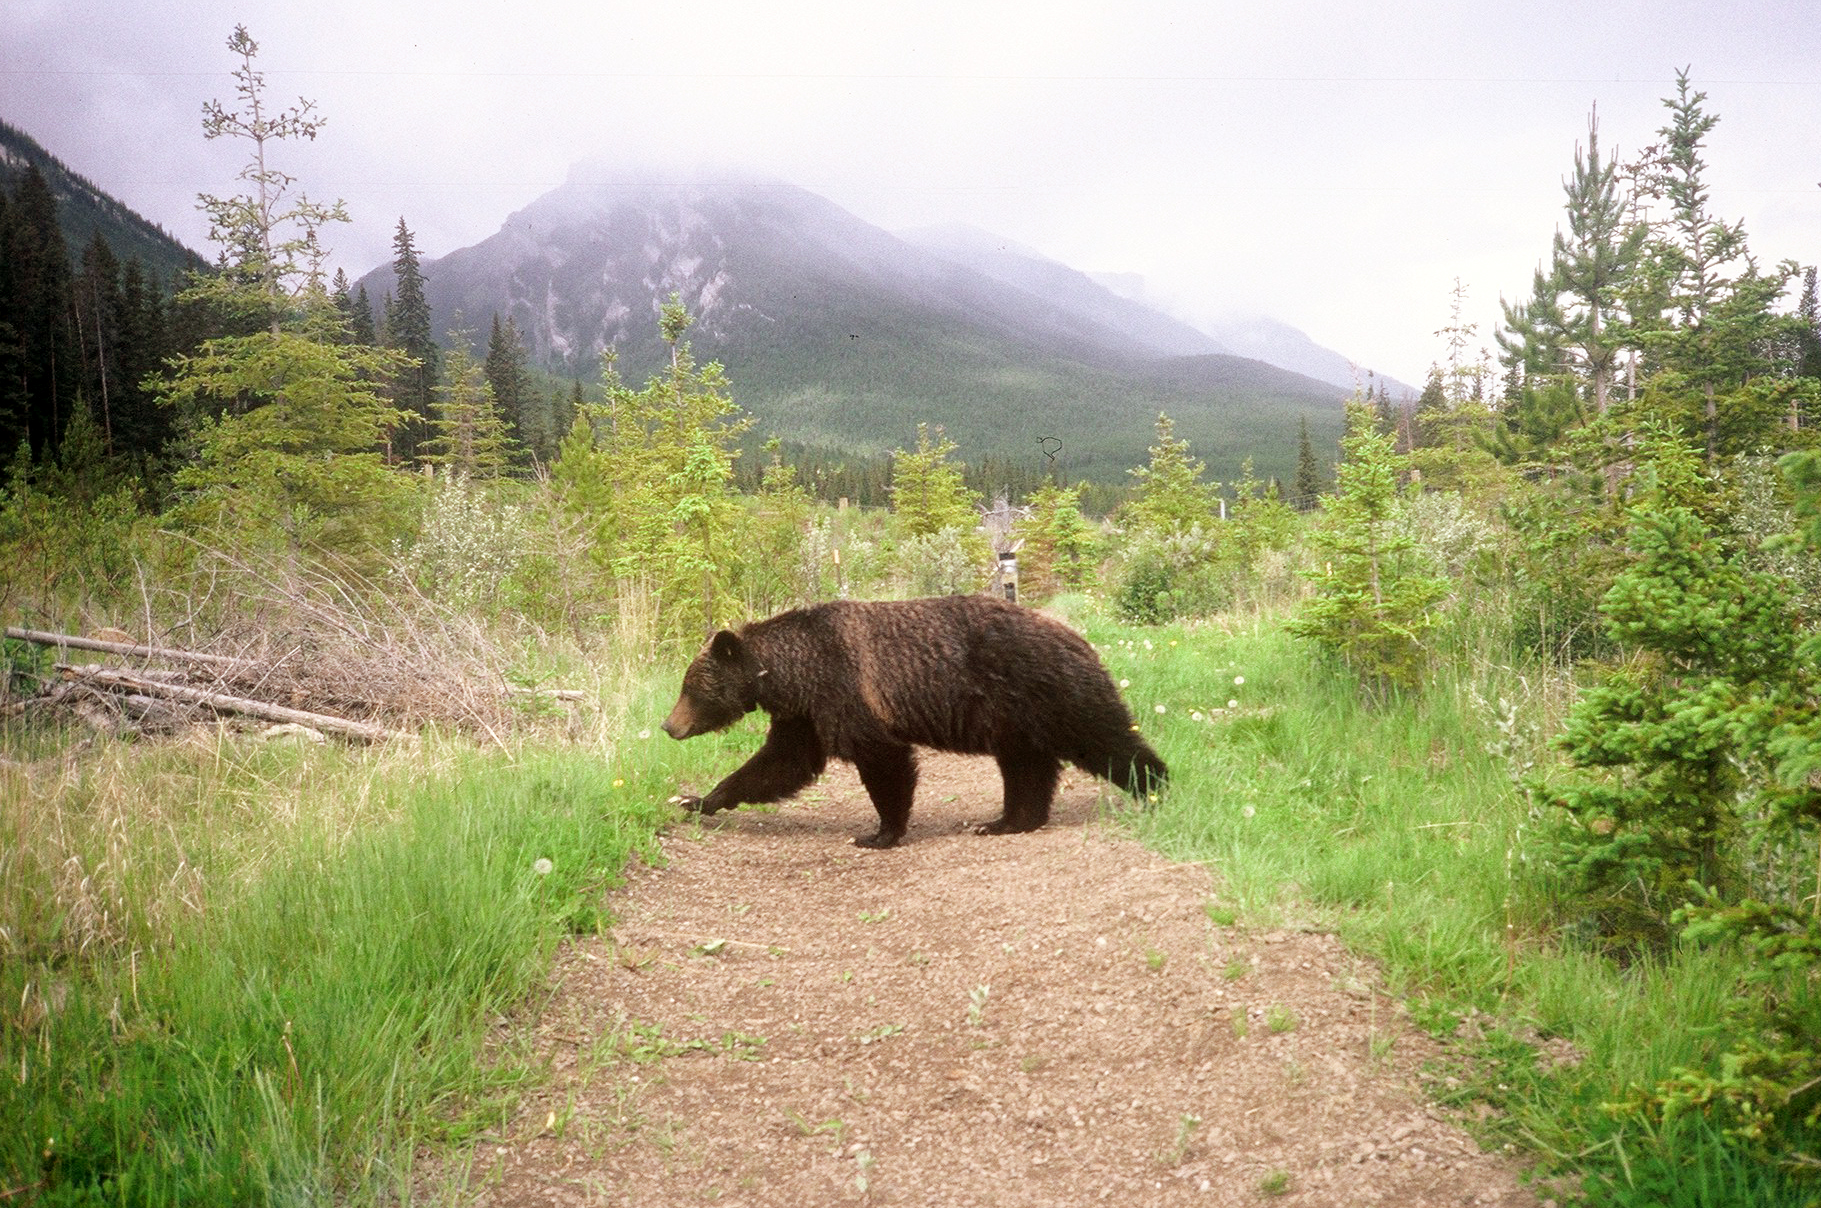 A bear walking across a mountain path.